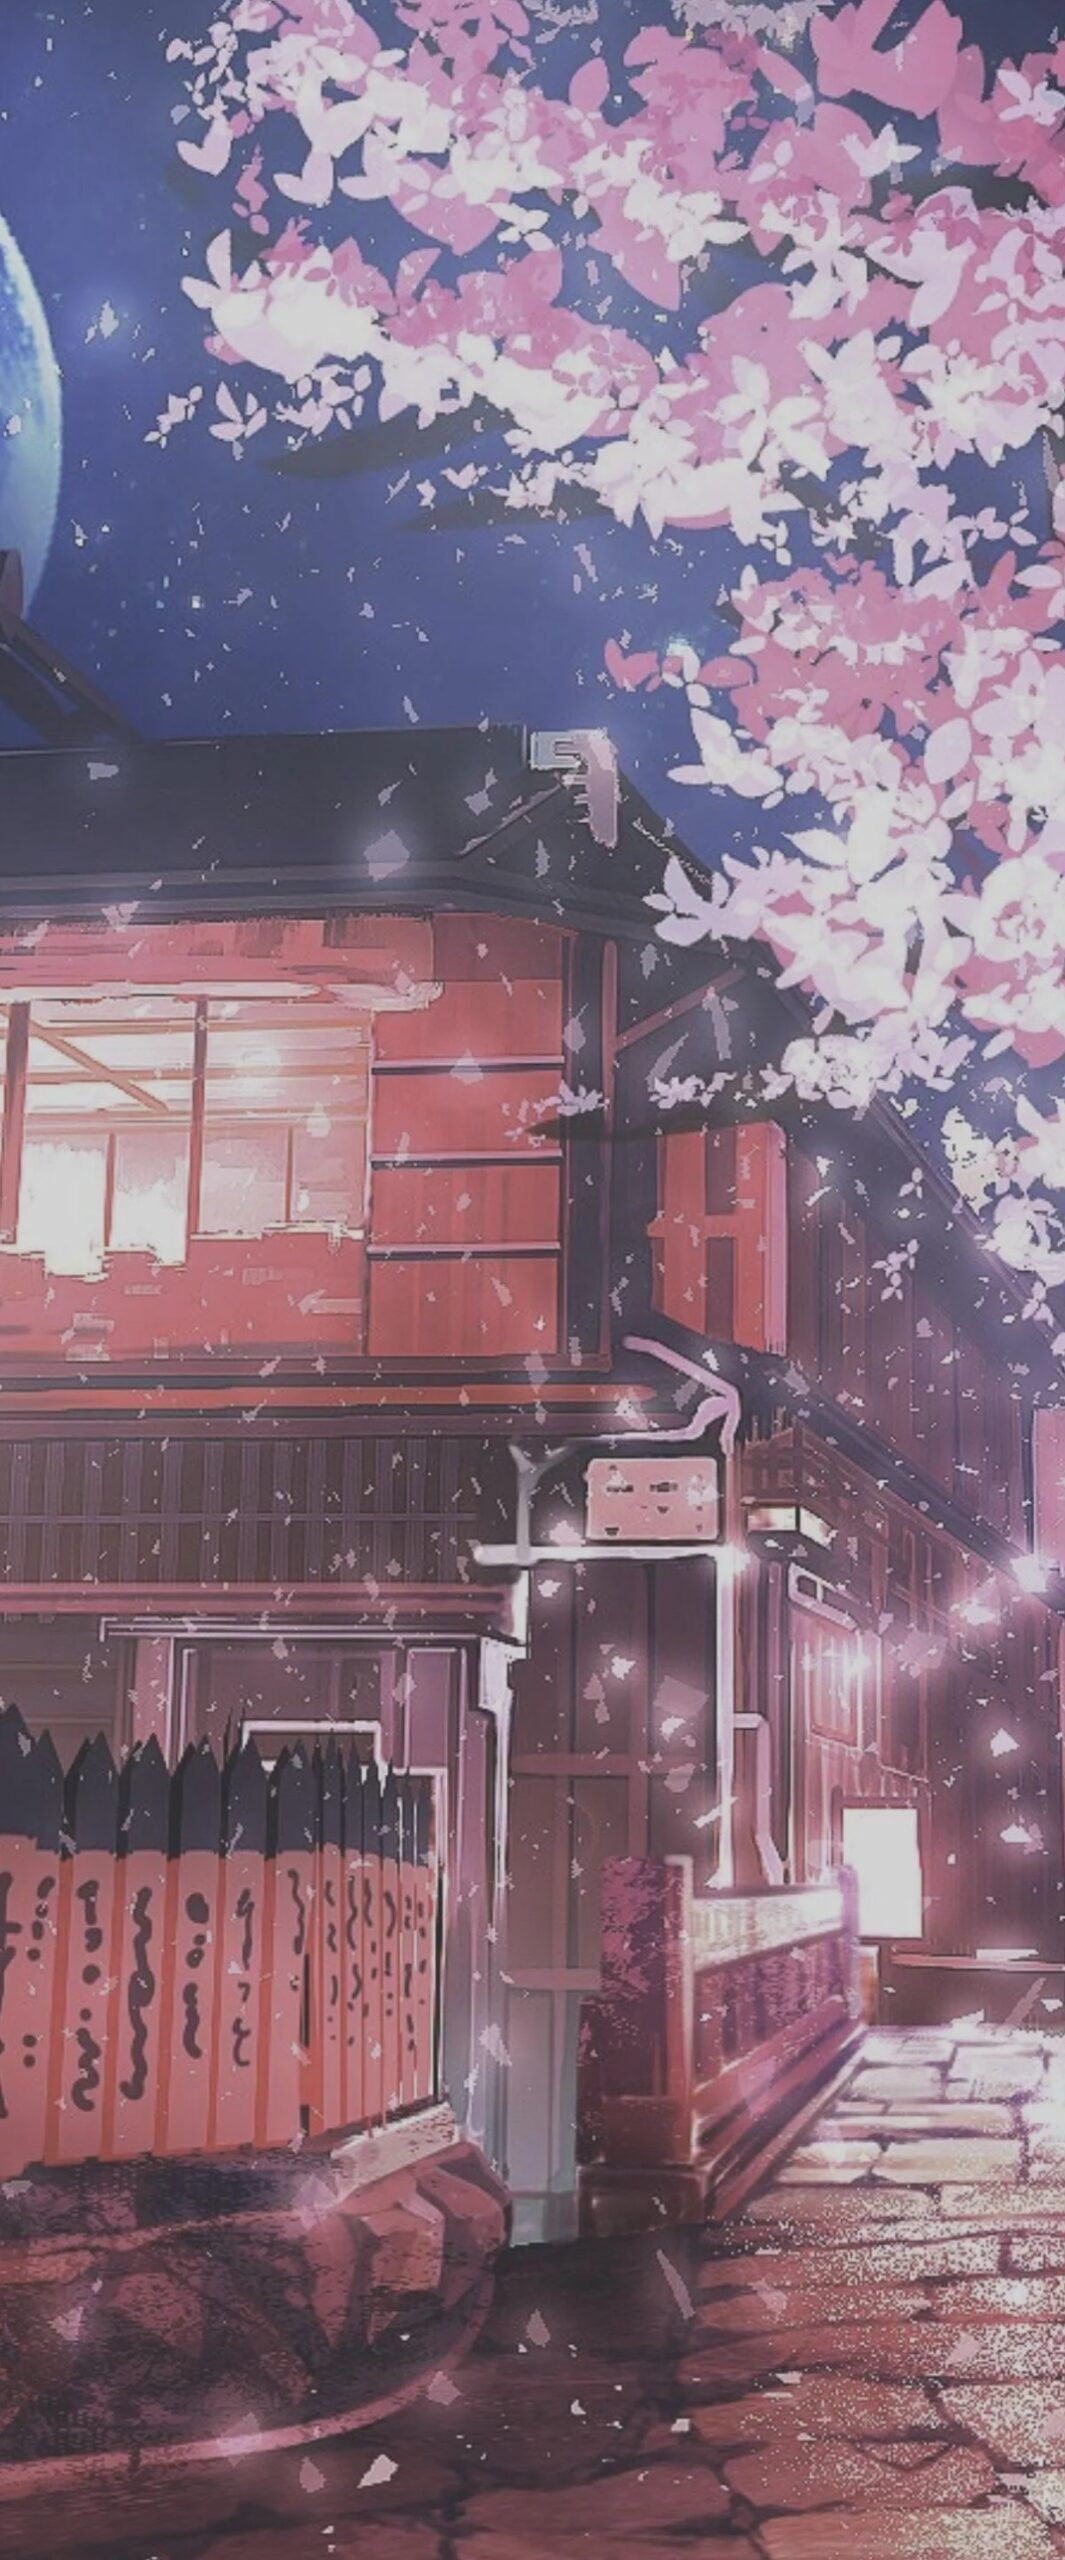 Best Anime Landscape iPhone Wallpaper [ 4k & HD Quality ]